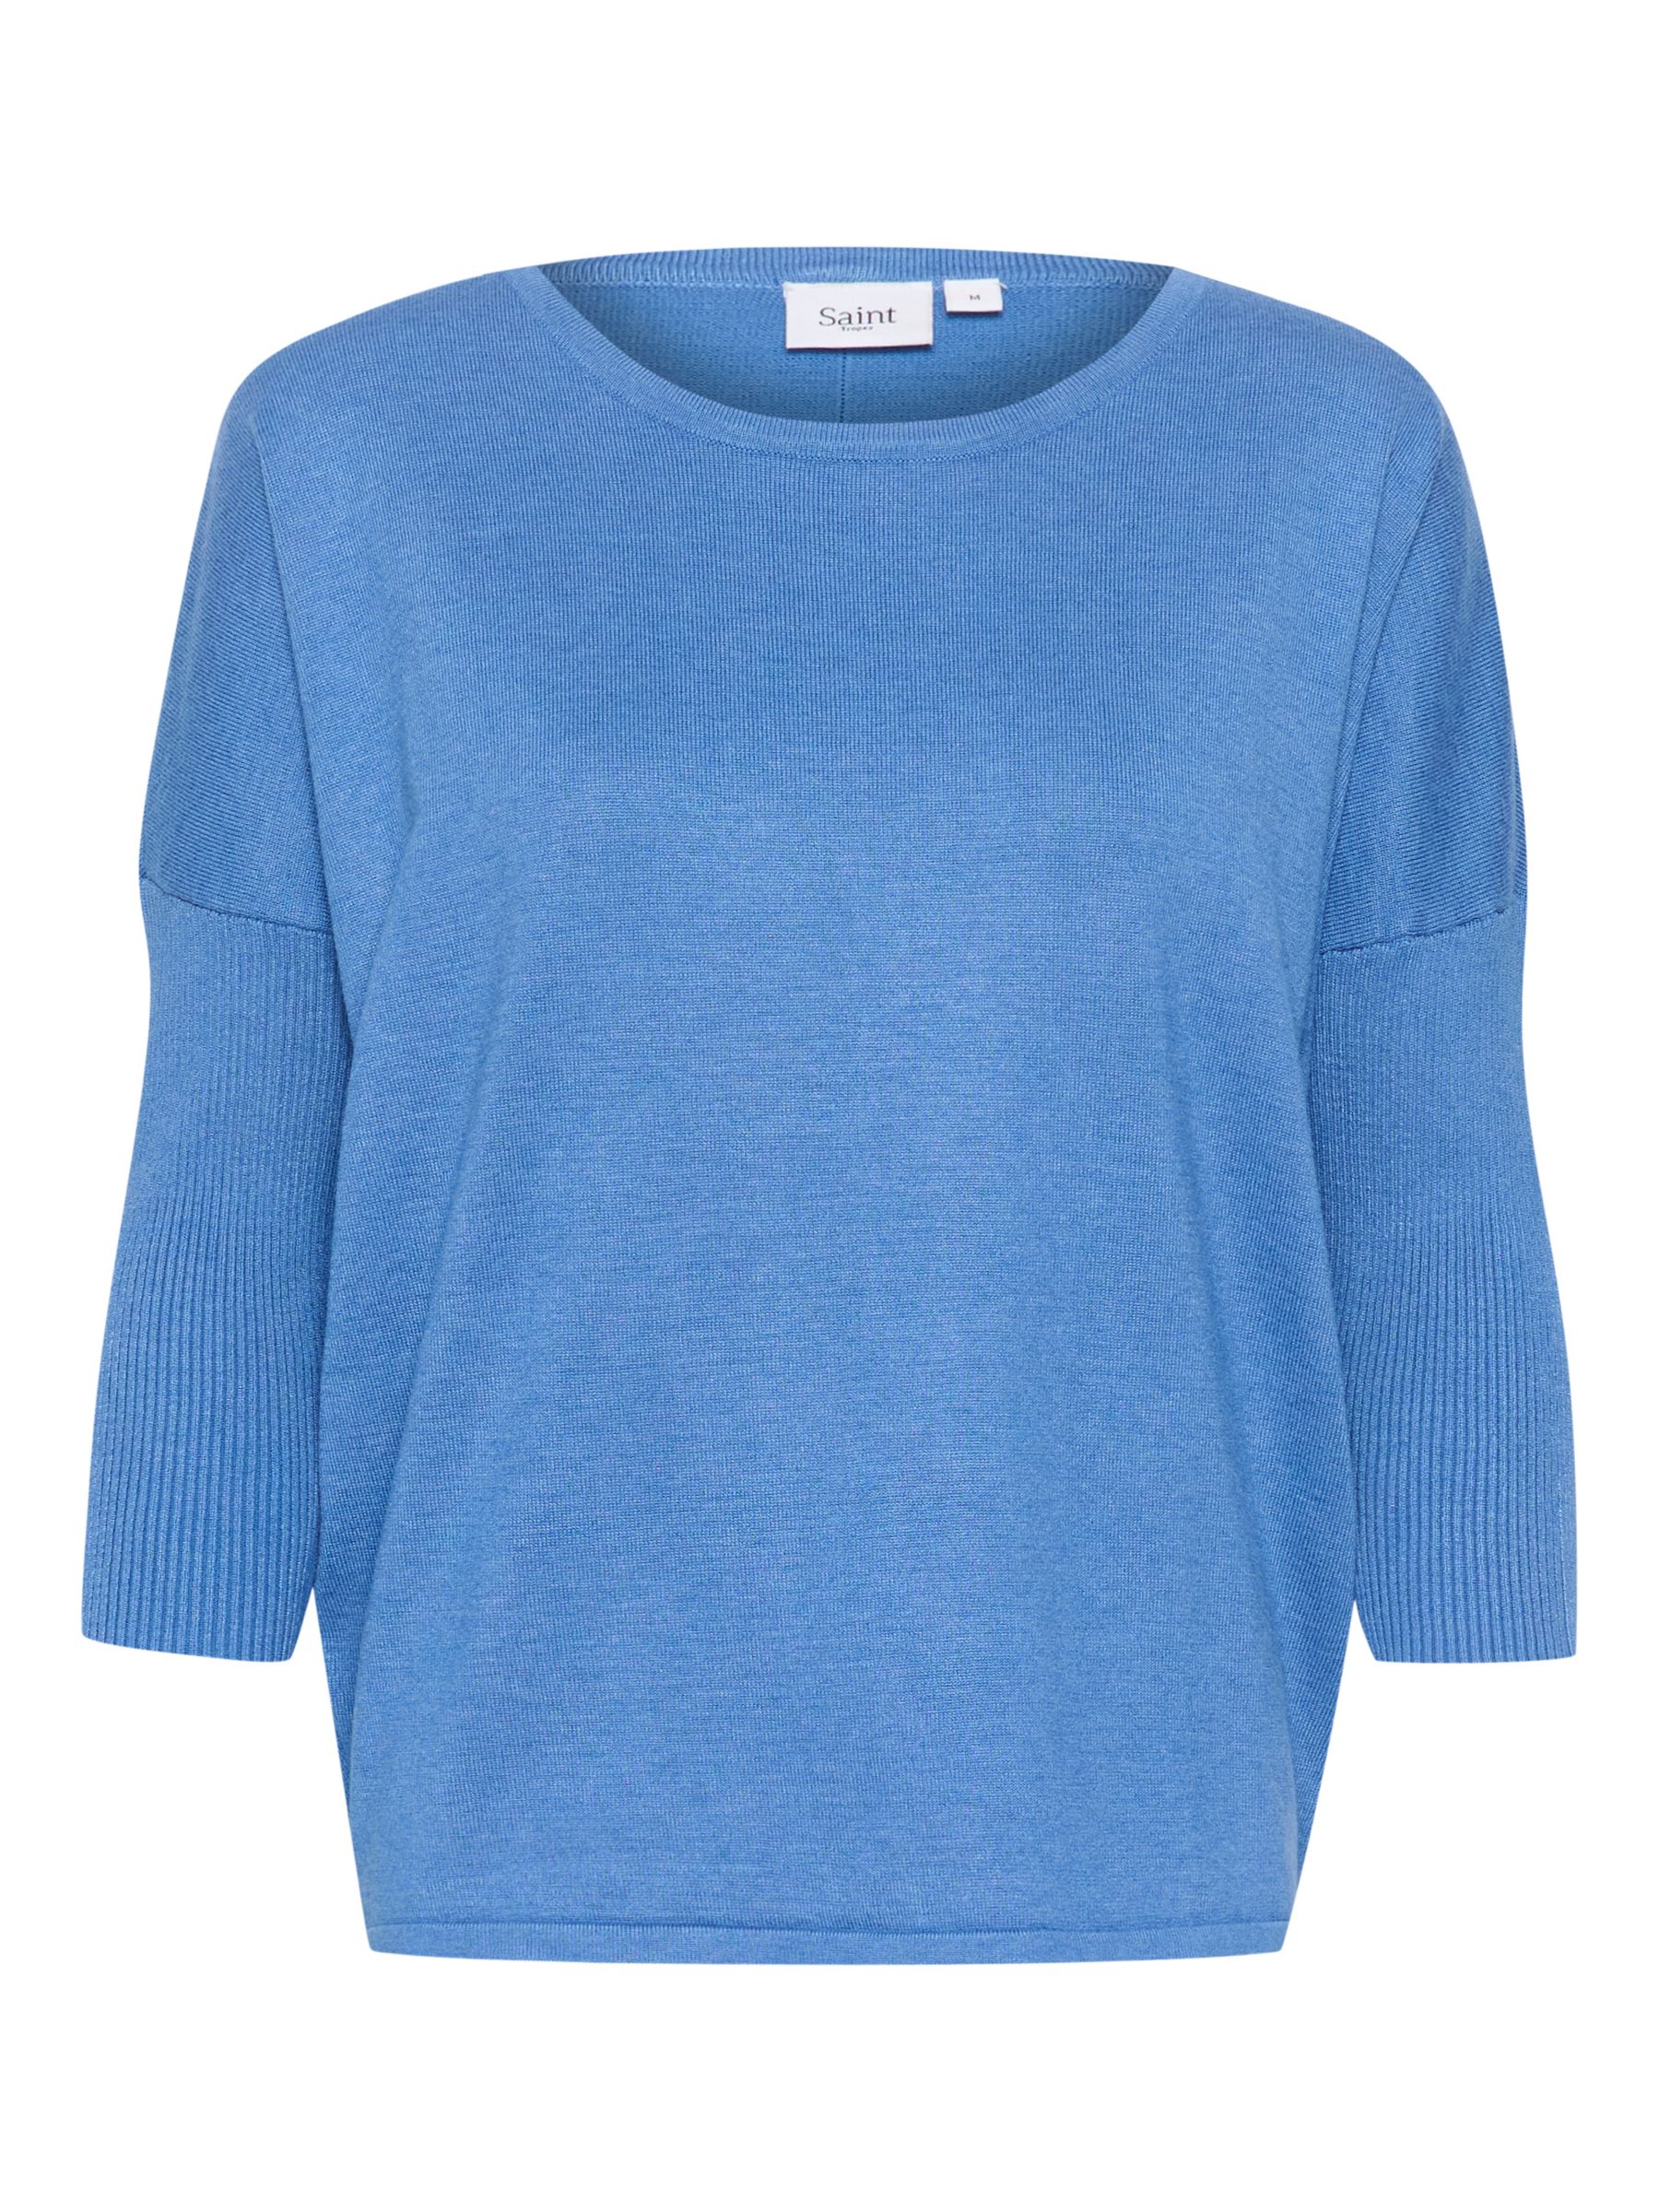 Buy Saint Tropez Mila 3/4 Sleeve Knitted Pullover, Dutch Blue Melange Online at johnlewis.com